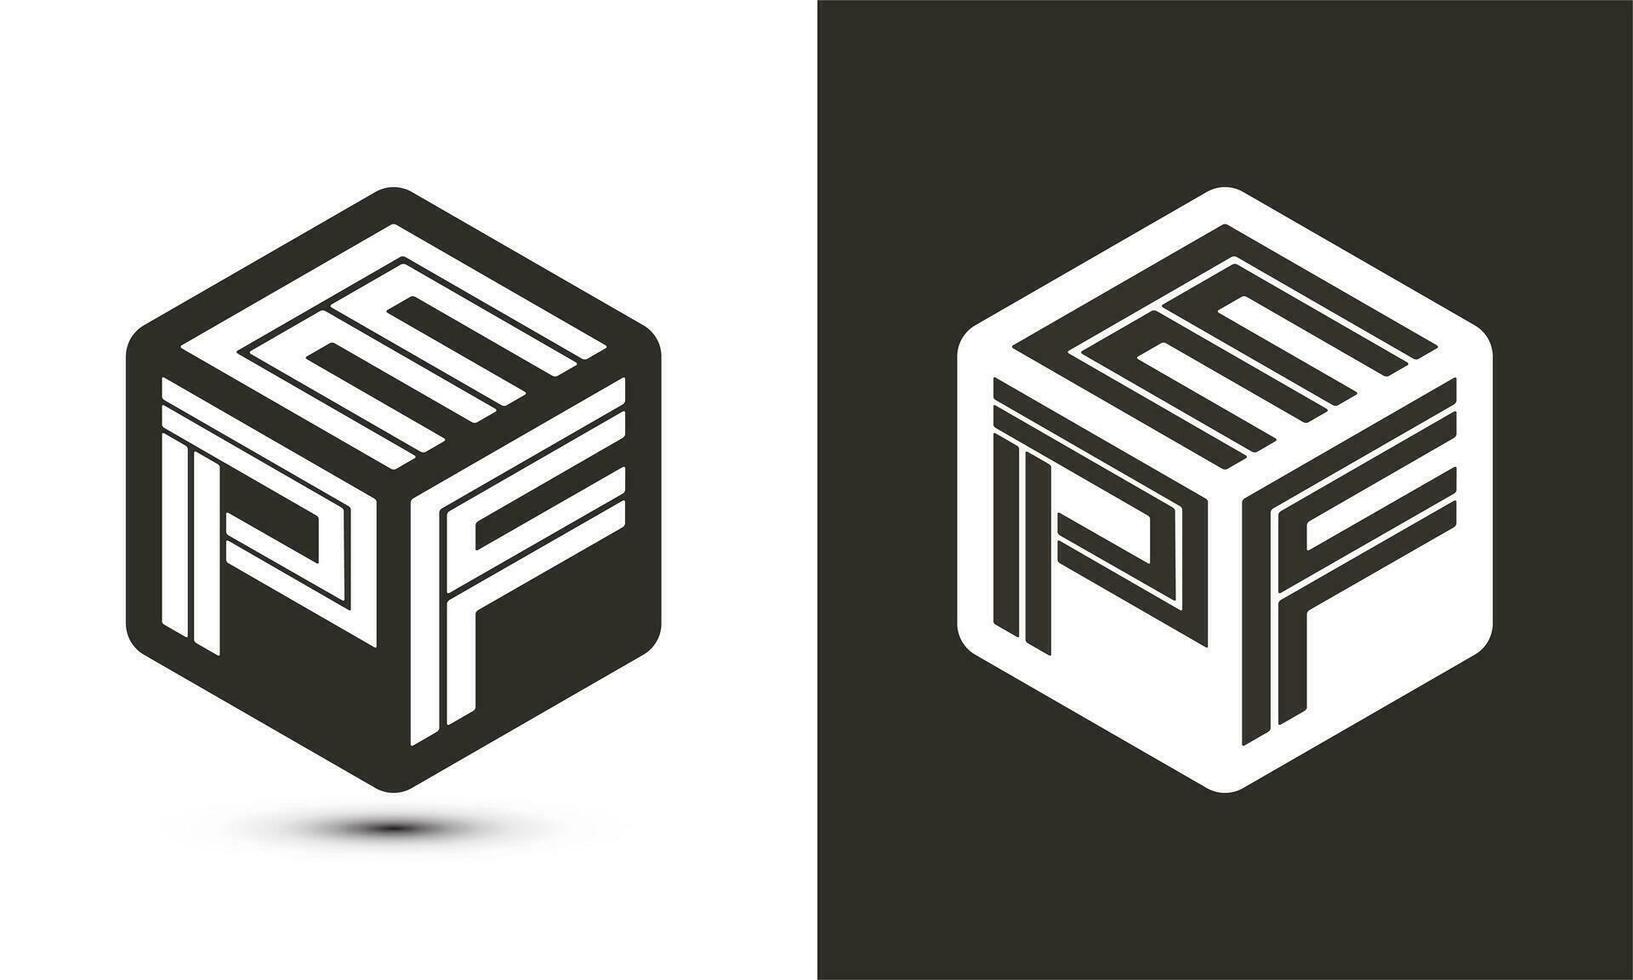 epf letra logo diseño con ilustrador cubo logo, vector logo moderno alfabeto fuente superposición estilo.